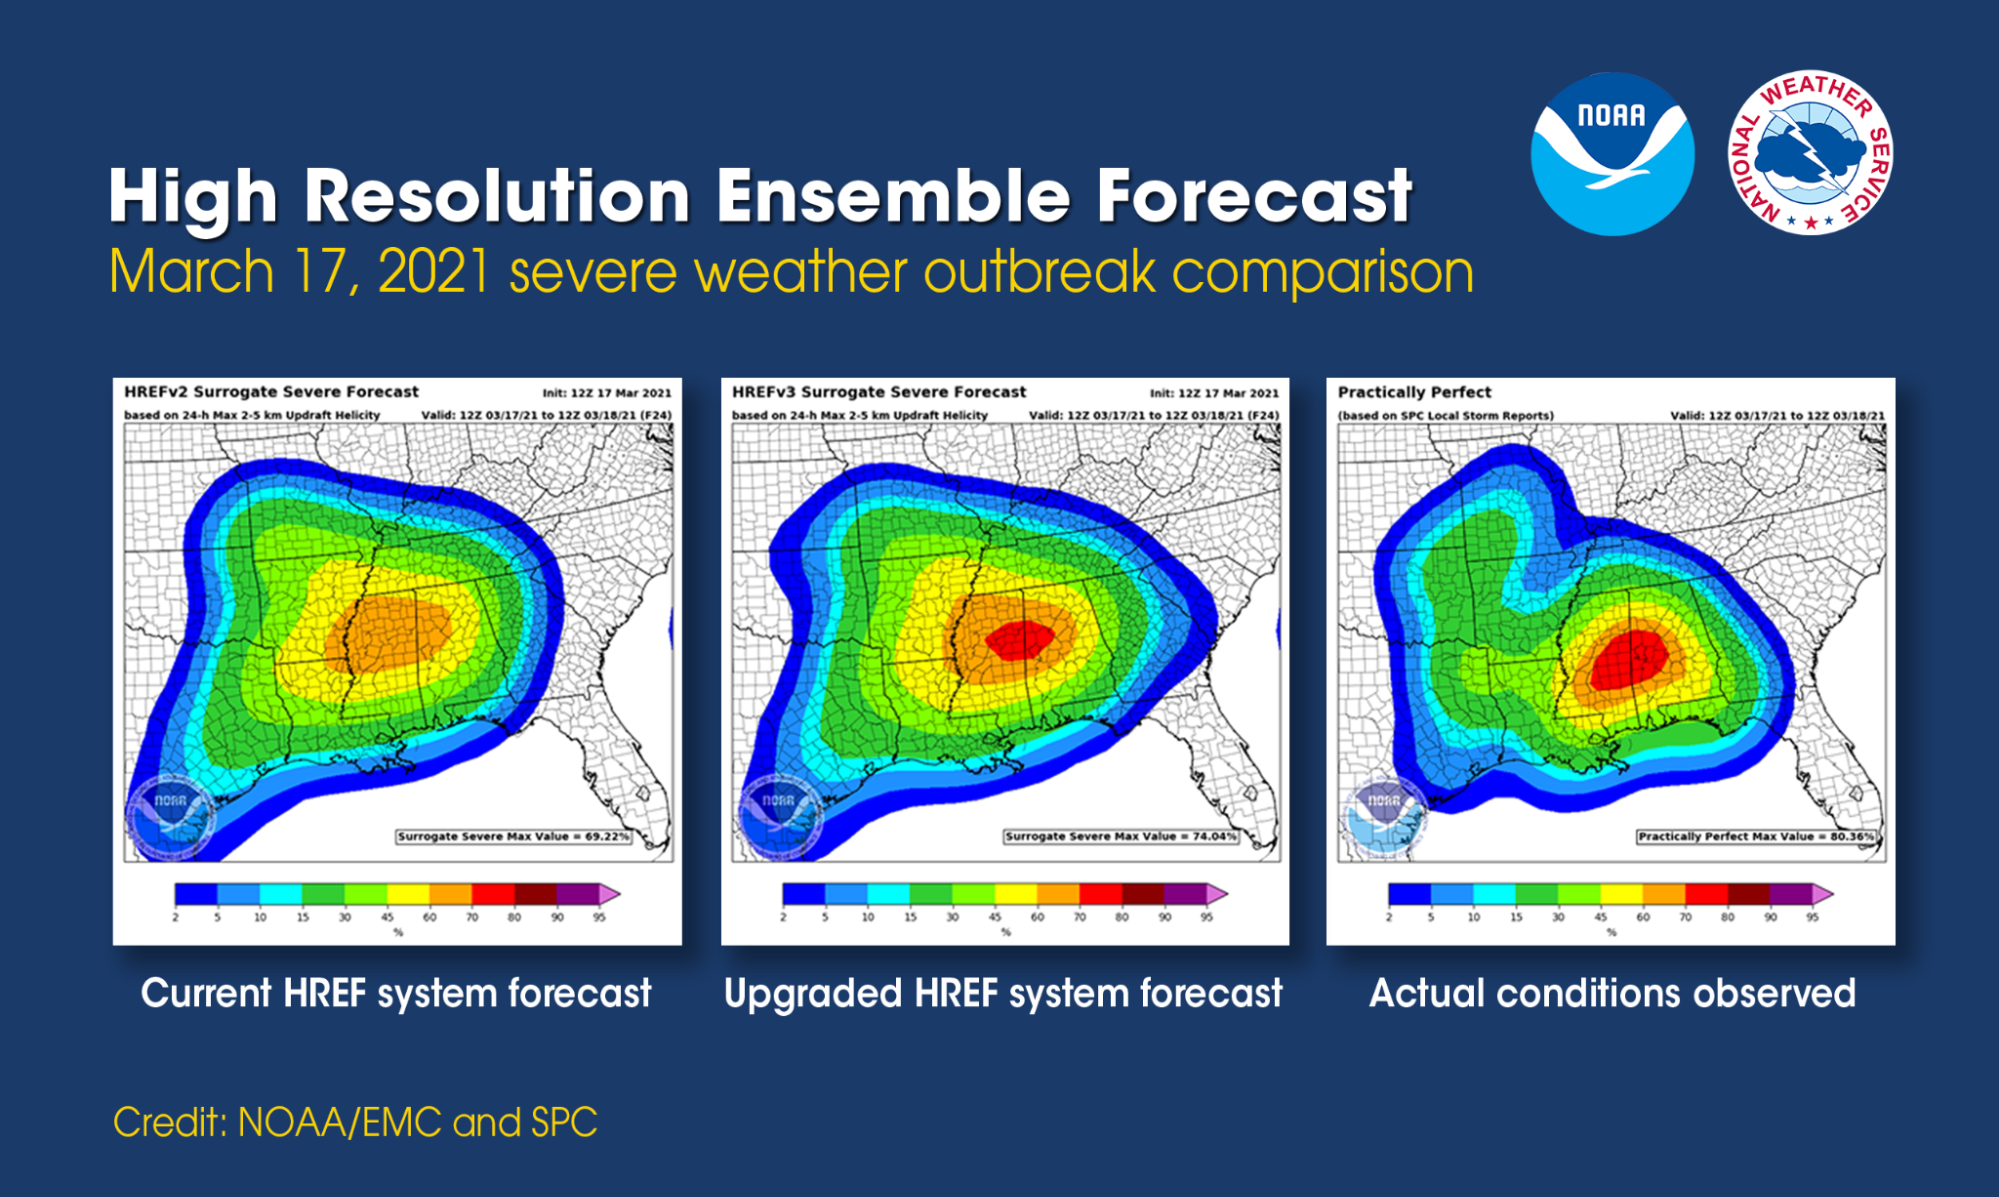 High Resolution Ensemble Forecast system undergoes upgrades